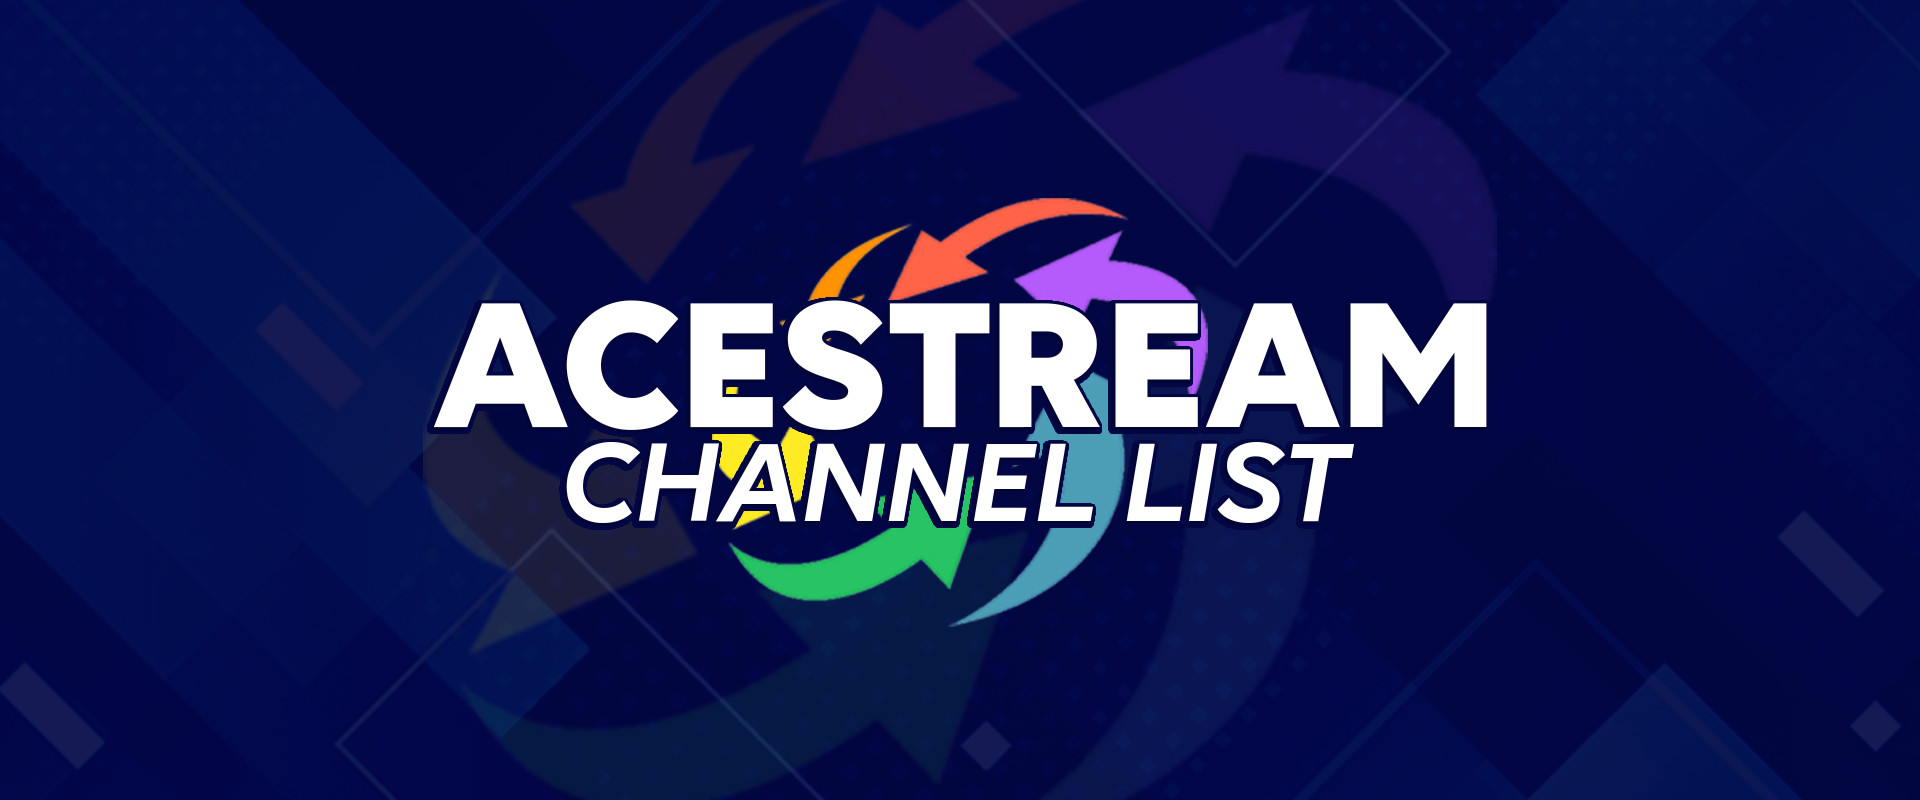 لیست کانال Acestream